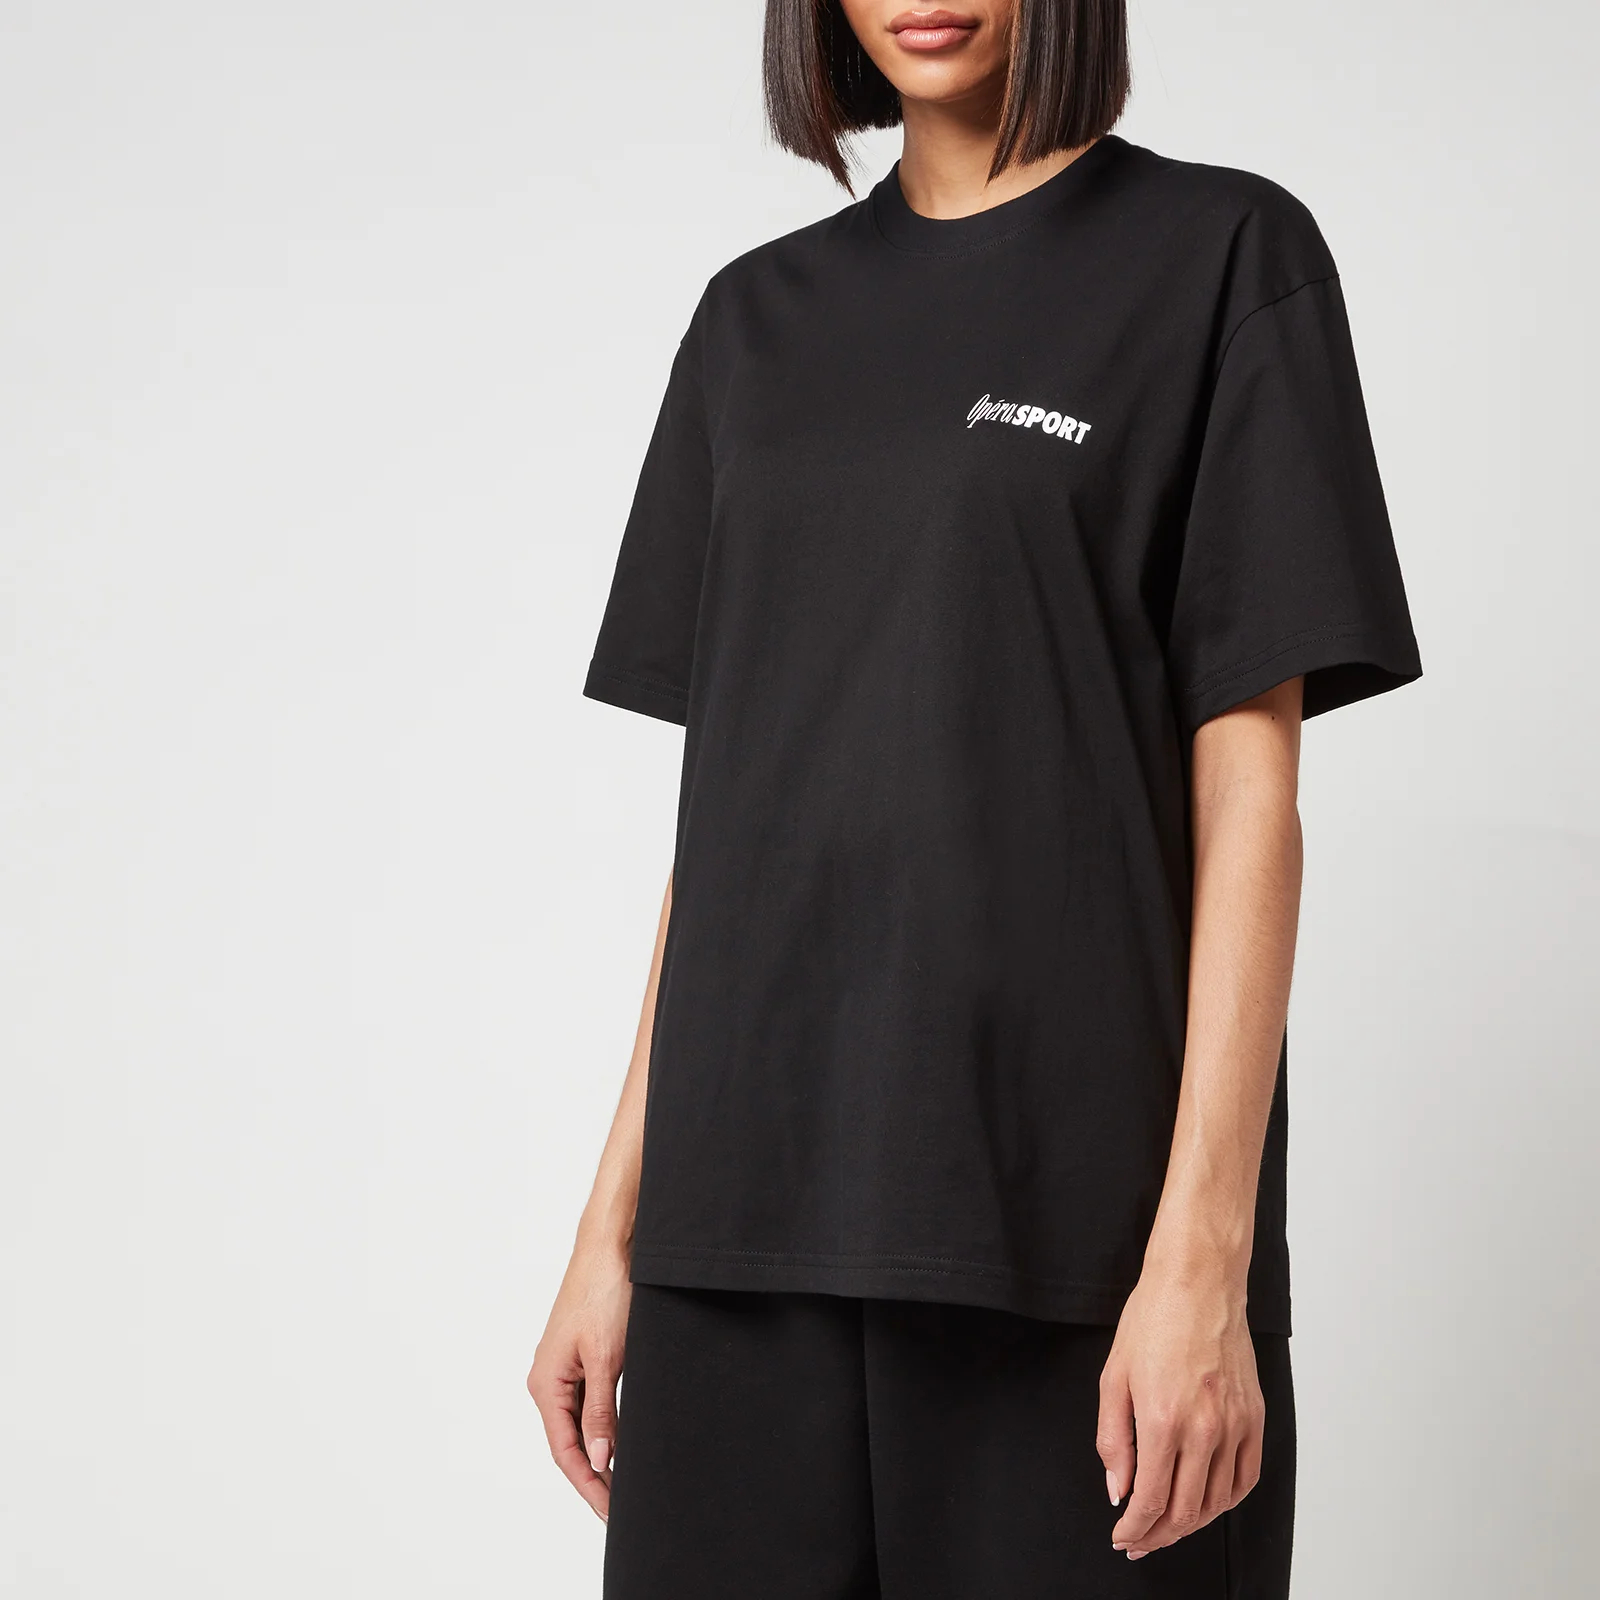 OpéraSPORT Women's Claude Unisex T-Shirt - Black Image 1